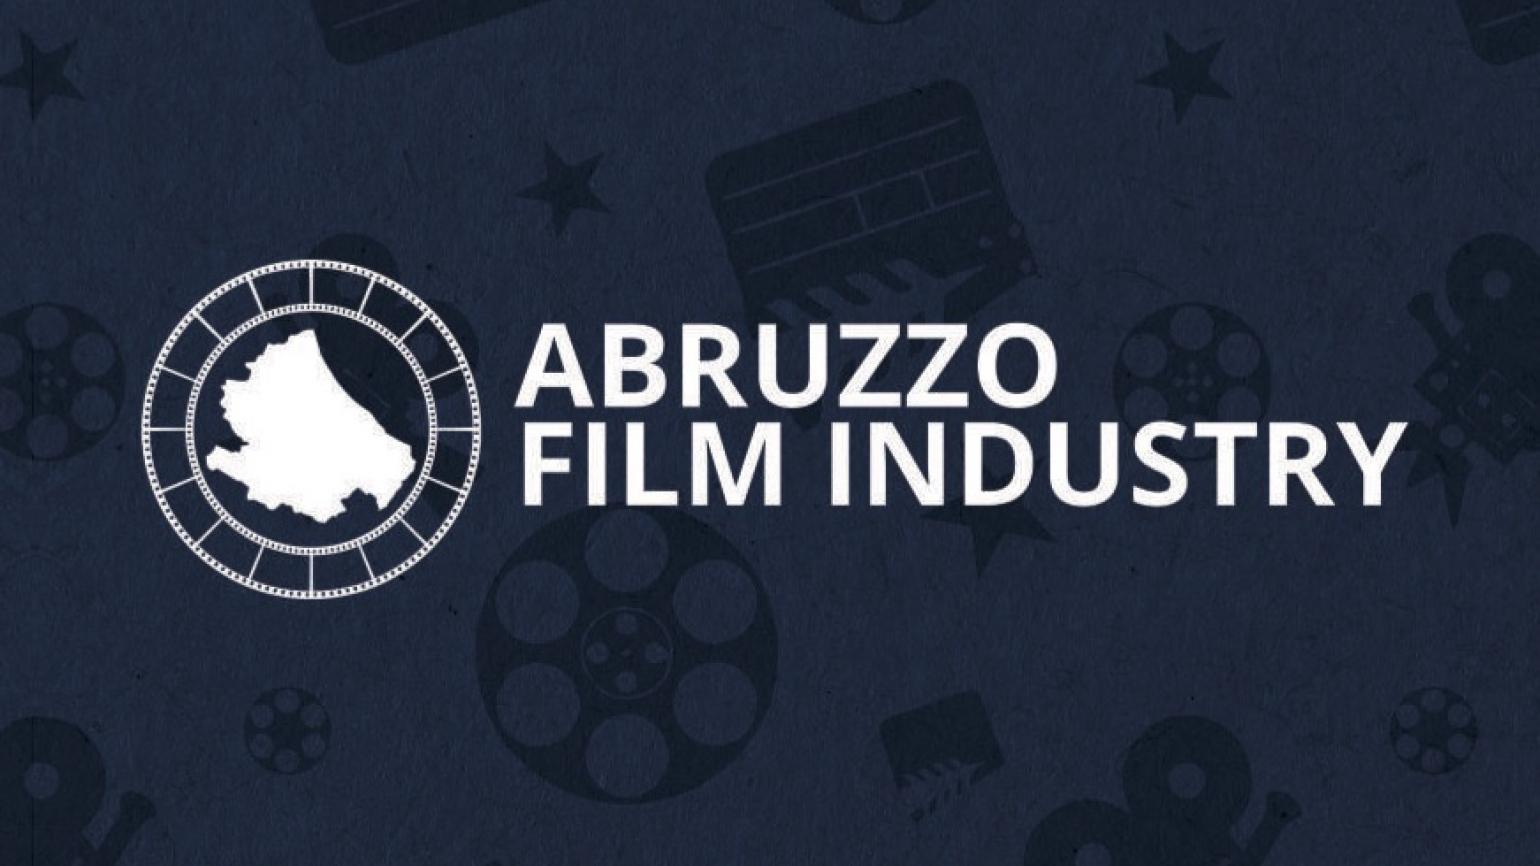 Abruzzo film industry